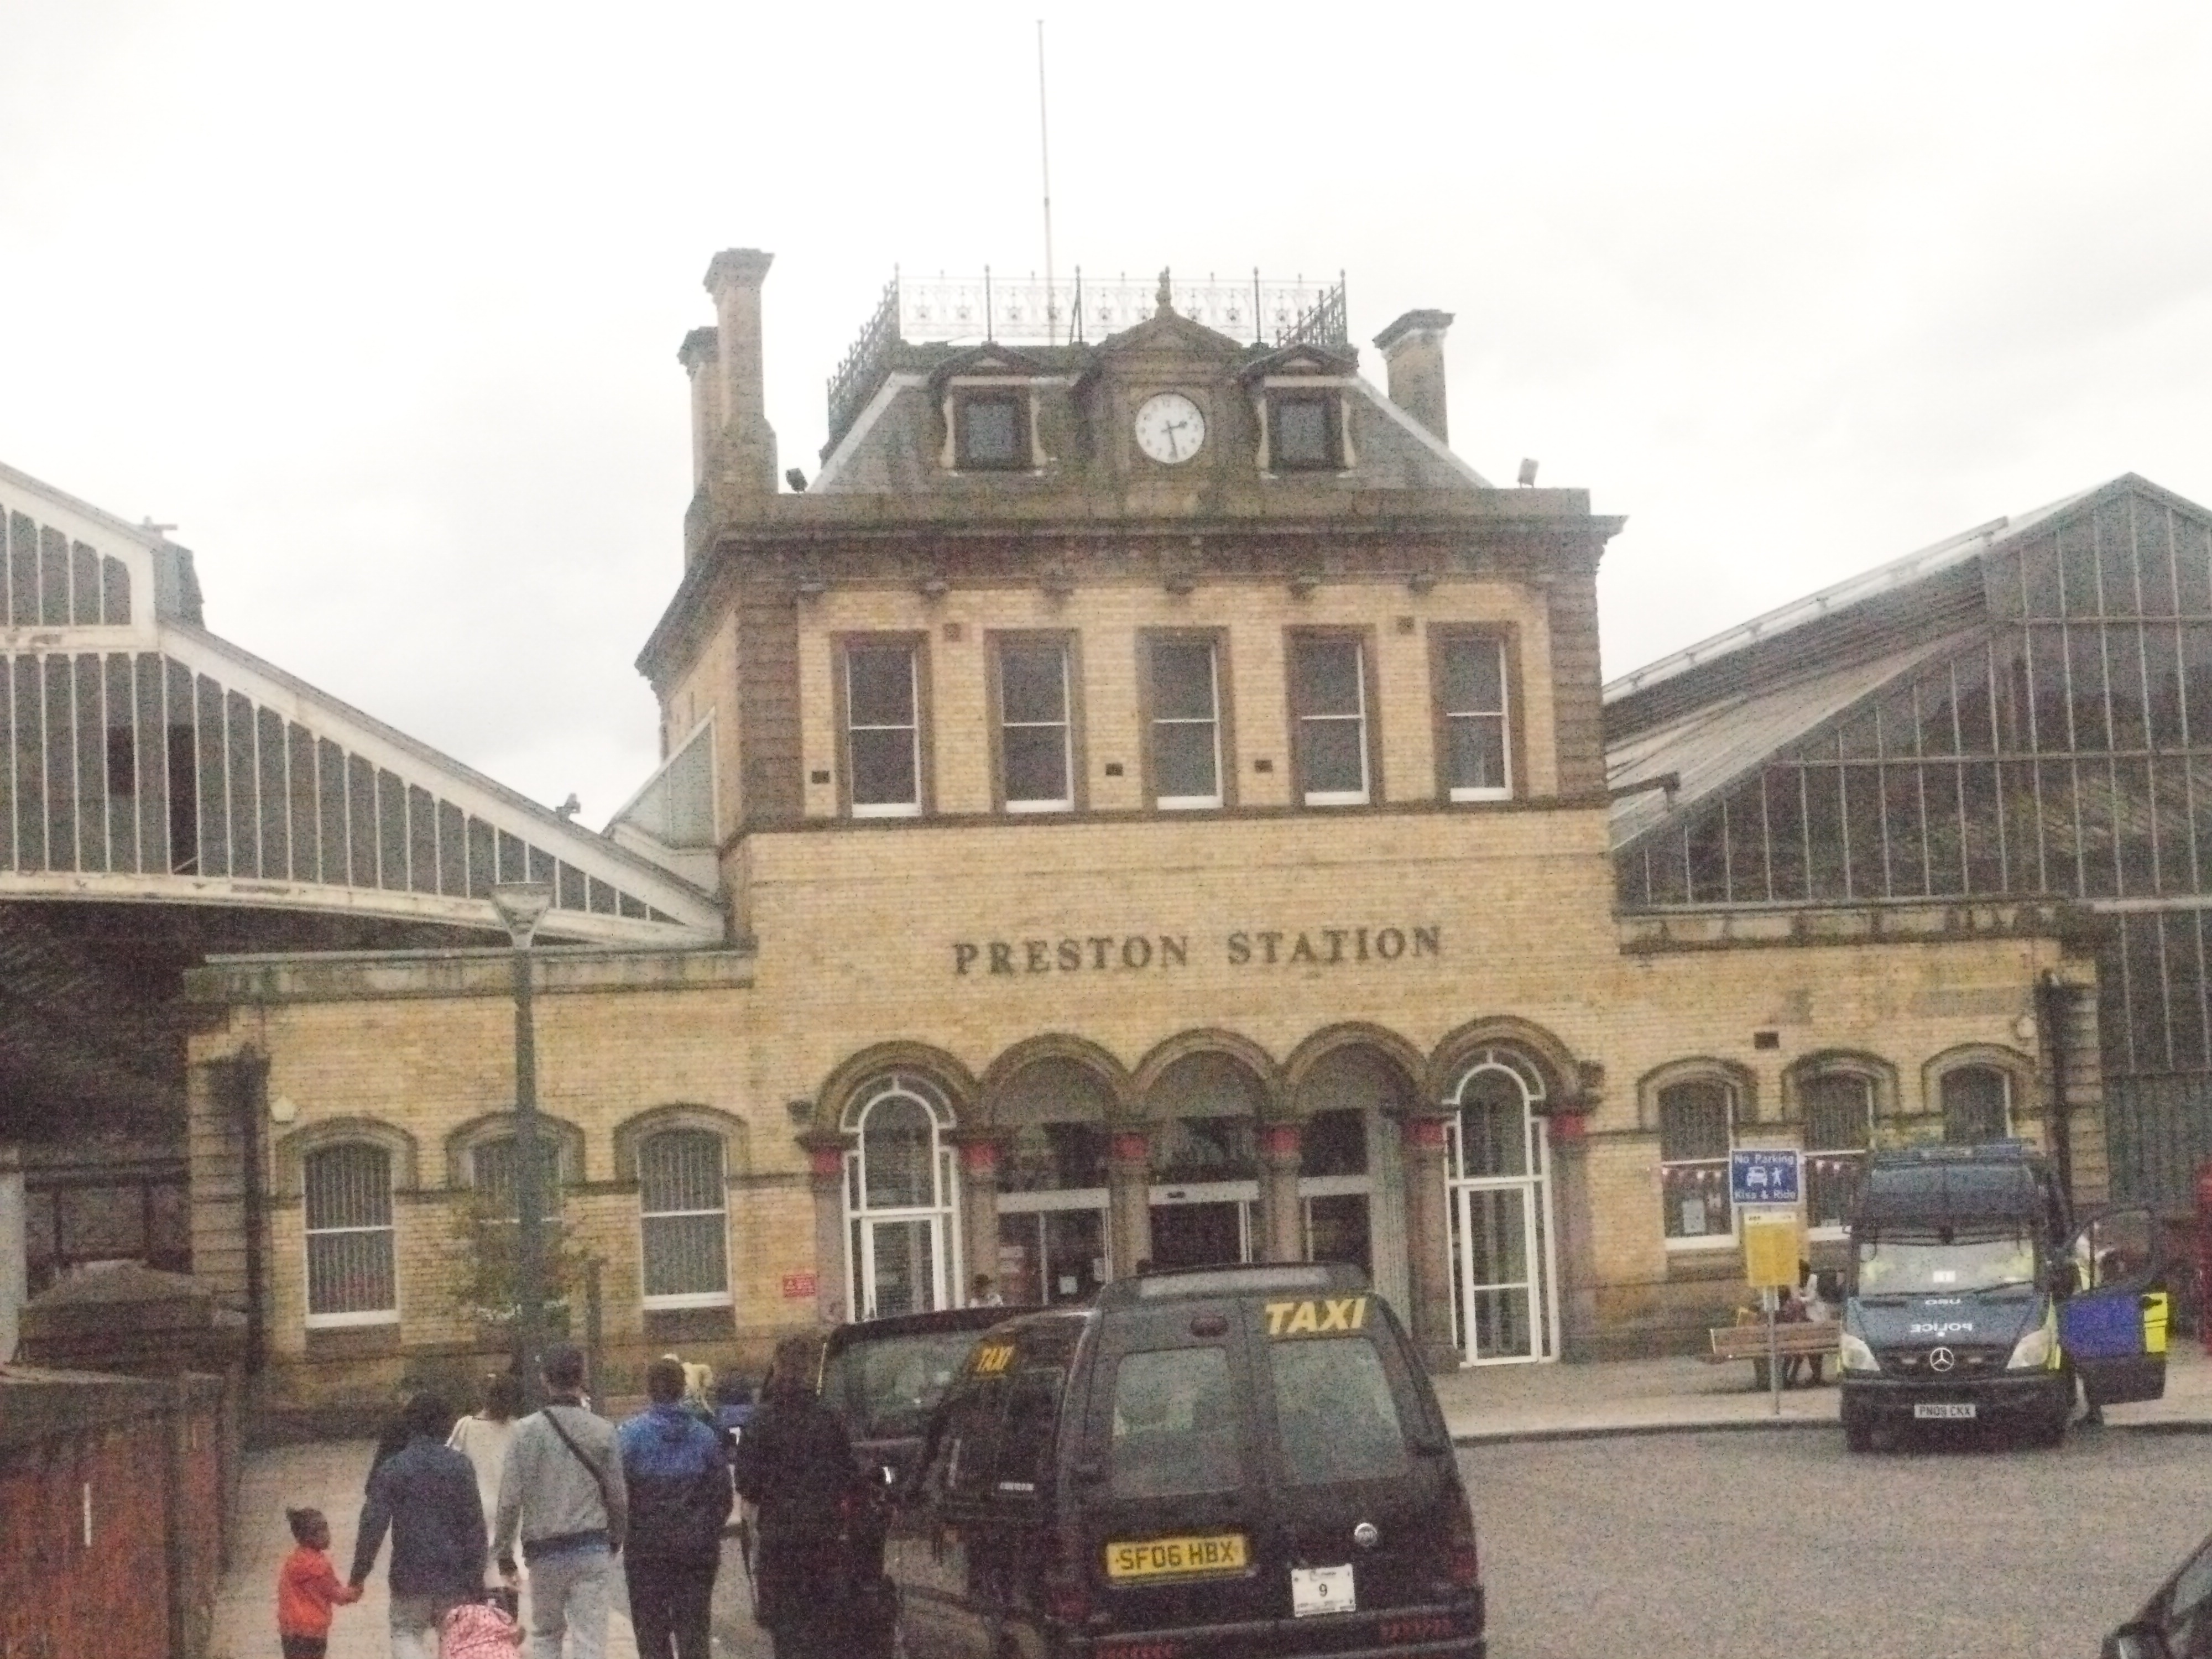  Photo taken by me – Preston railway station 